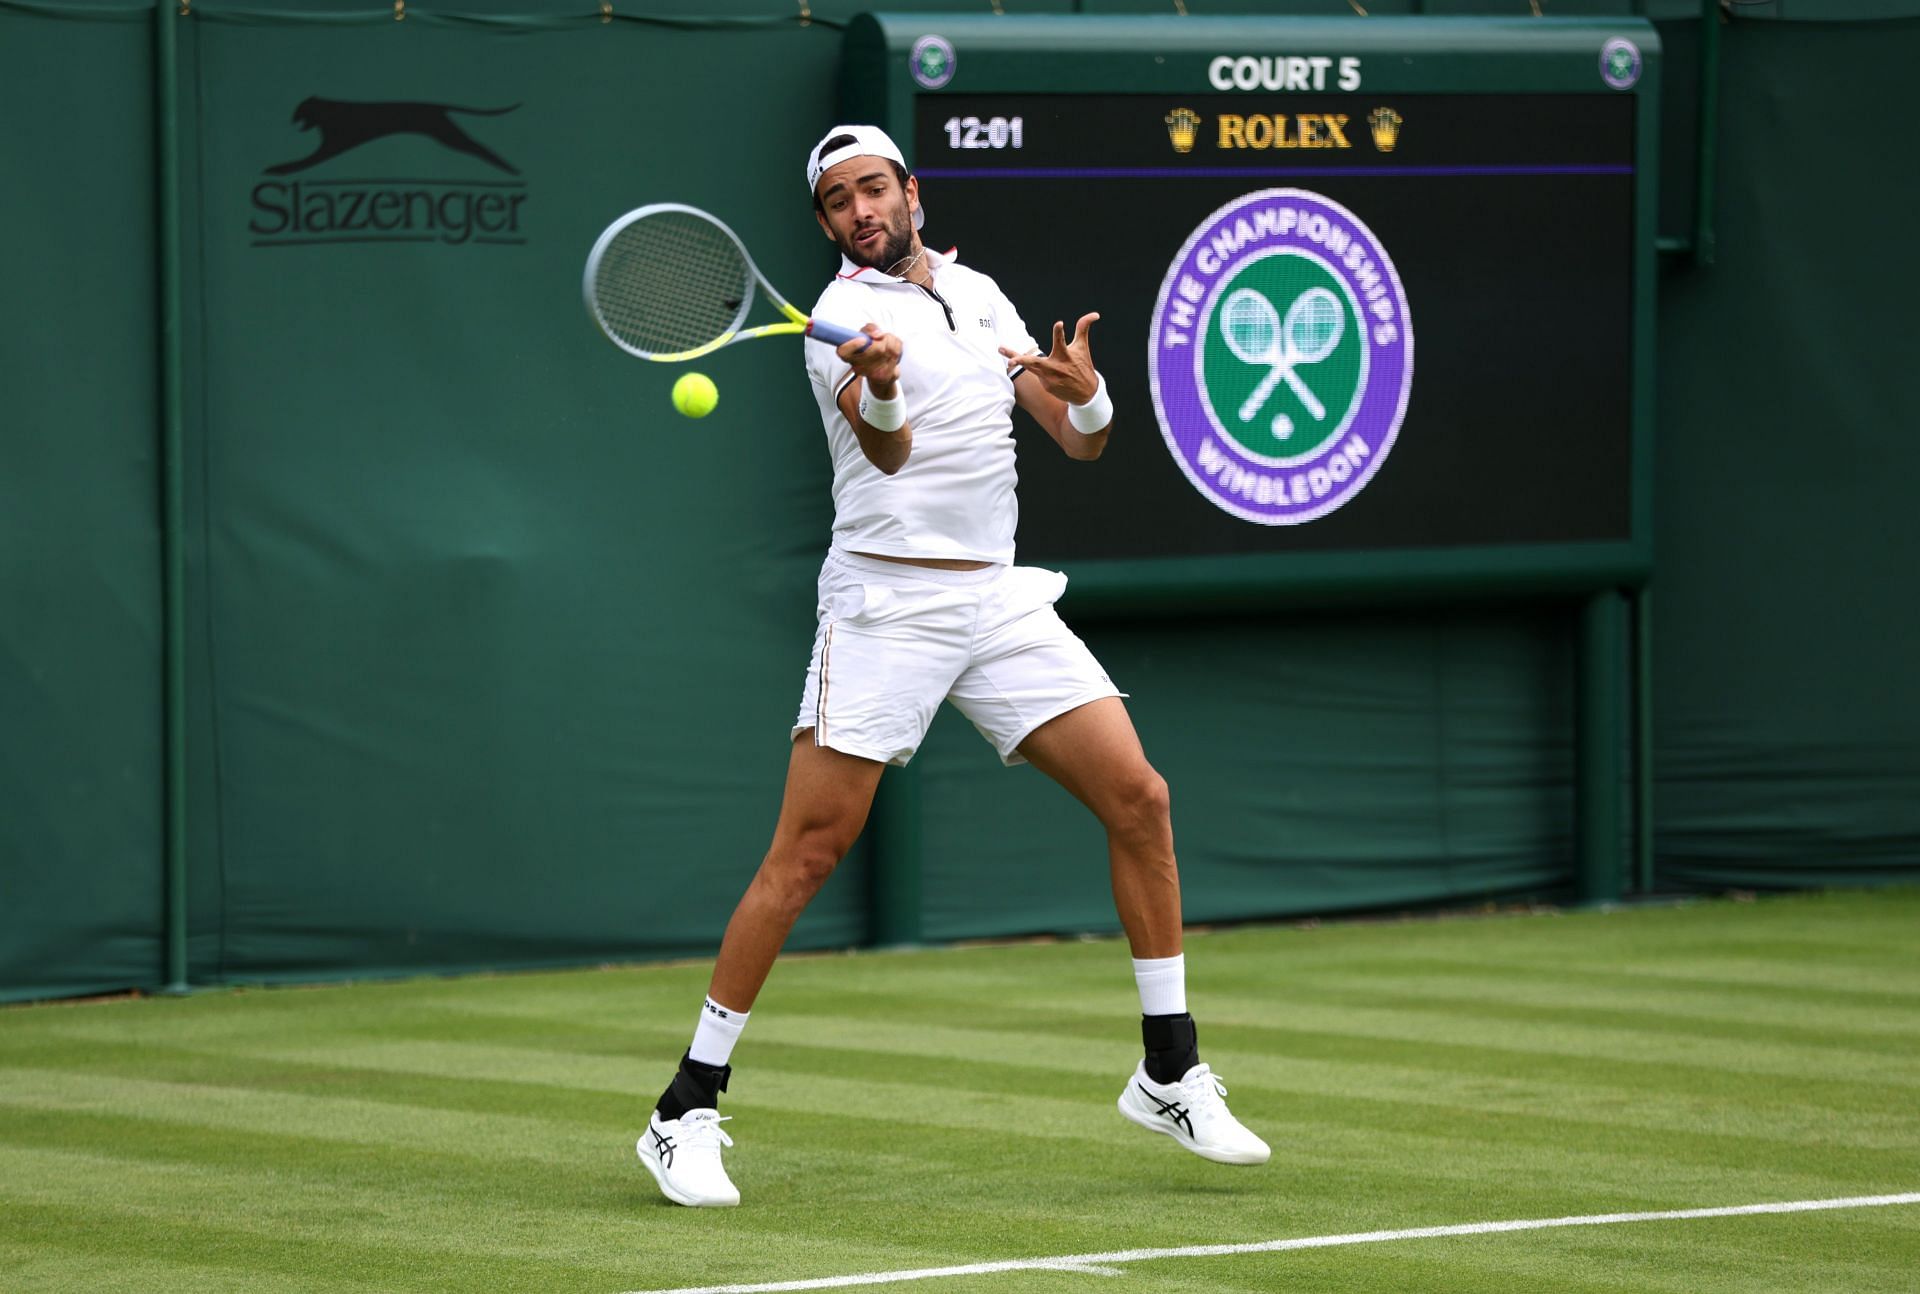 Matteo Berrettini in action at the 2022 Wimbledon Championships.